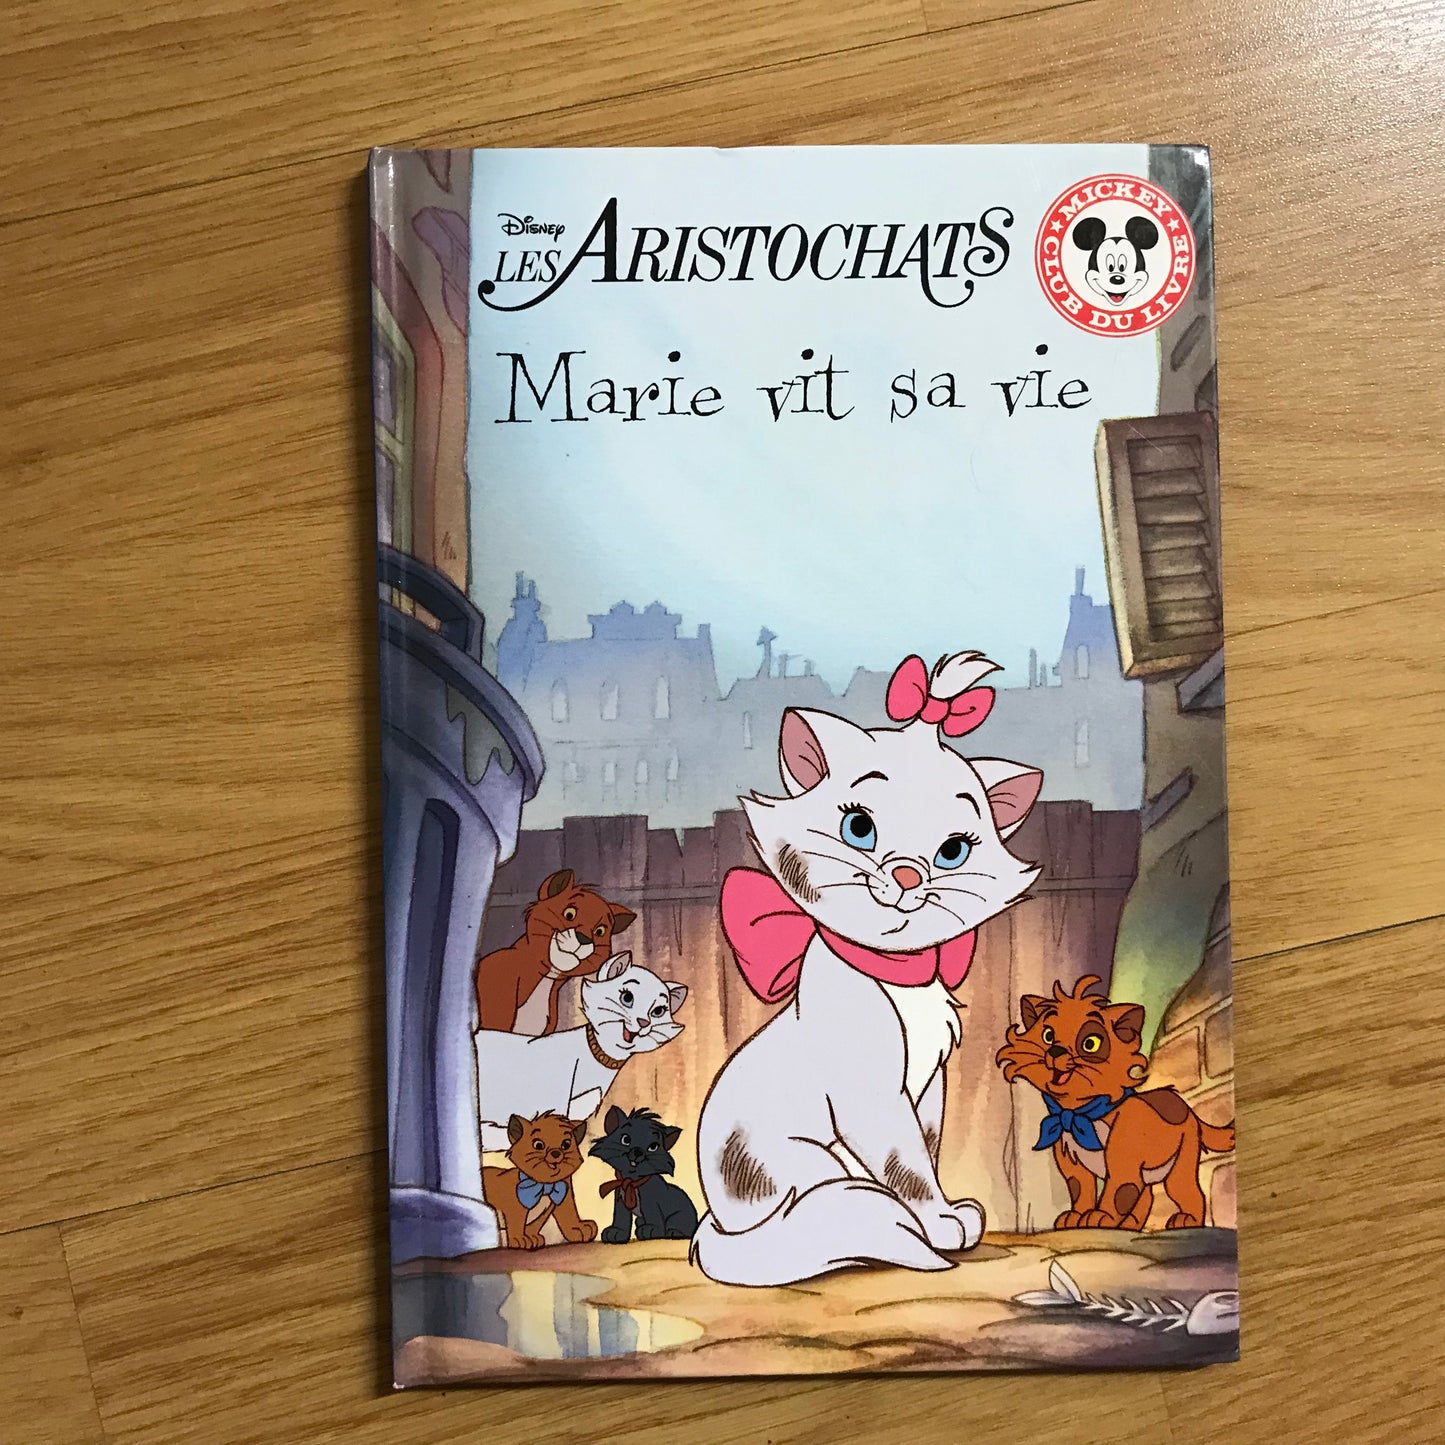 Disney - Les Aristochats, Marie vit sa vie